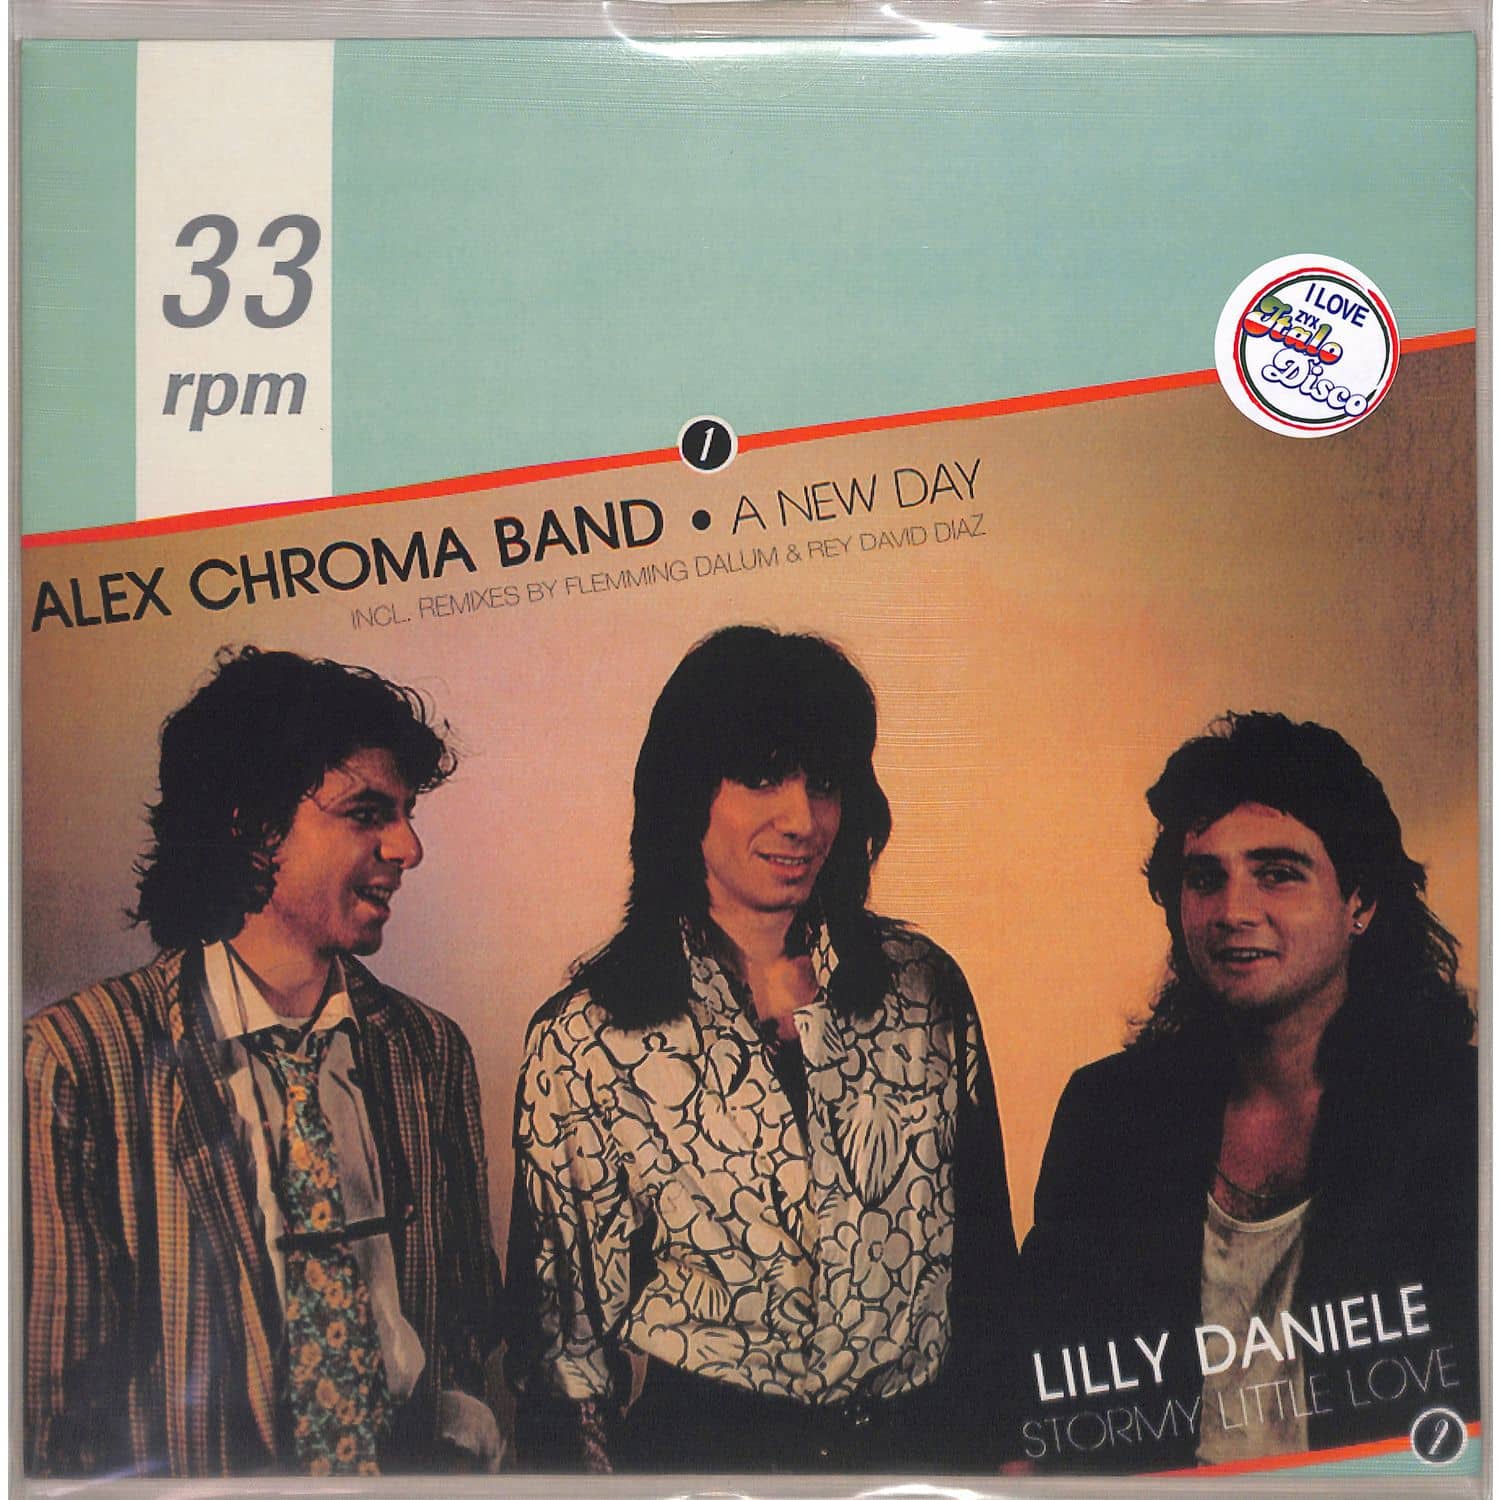 Alex Chroma Band - A NEW DAY